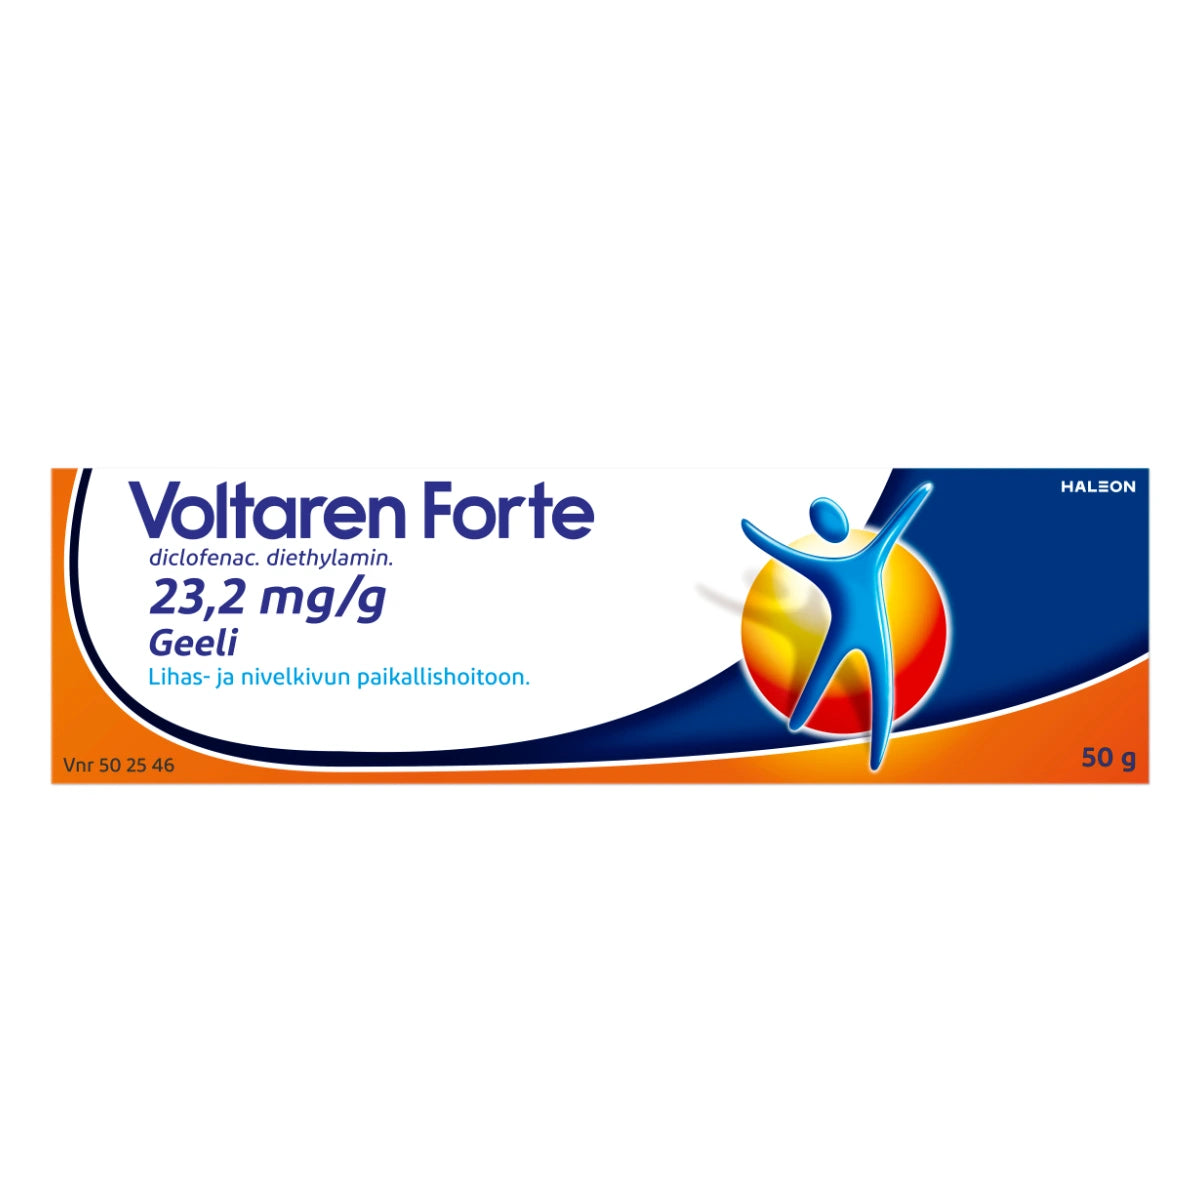 VOLTAREN FORTE 23,2 mg/g geeli 50 g lihas- ja nivelkipuun